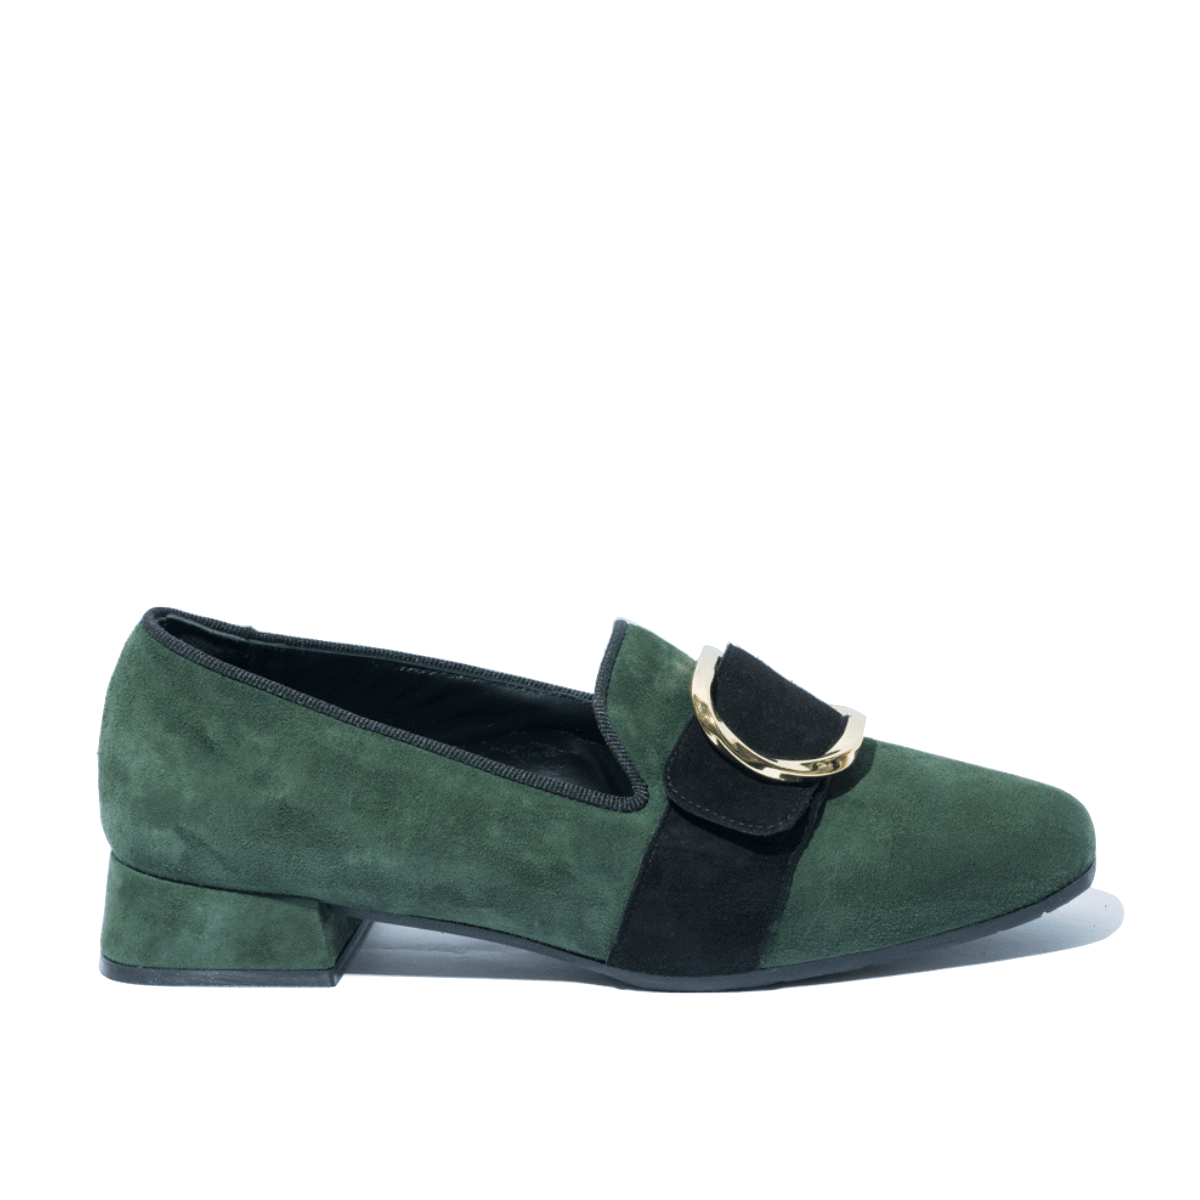 Pantofolina Le Gazzelle Fibbia Oro Camoscio Verde - Le Gazzelle - Calzature Savorè